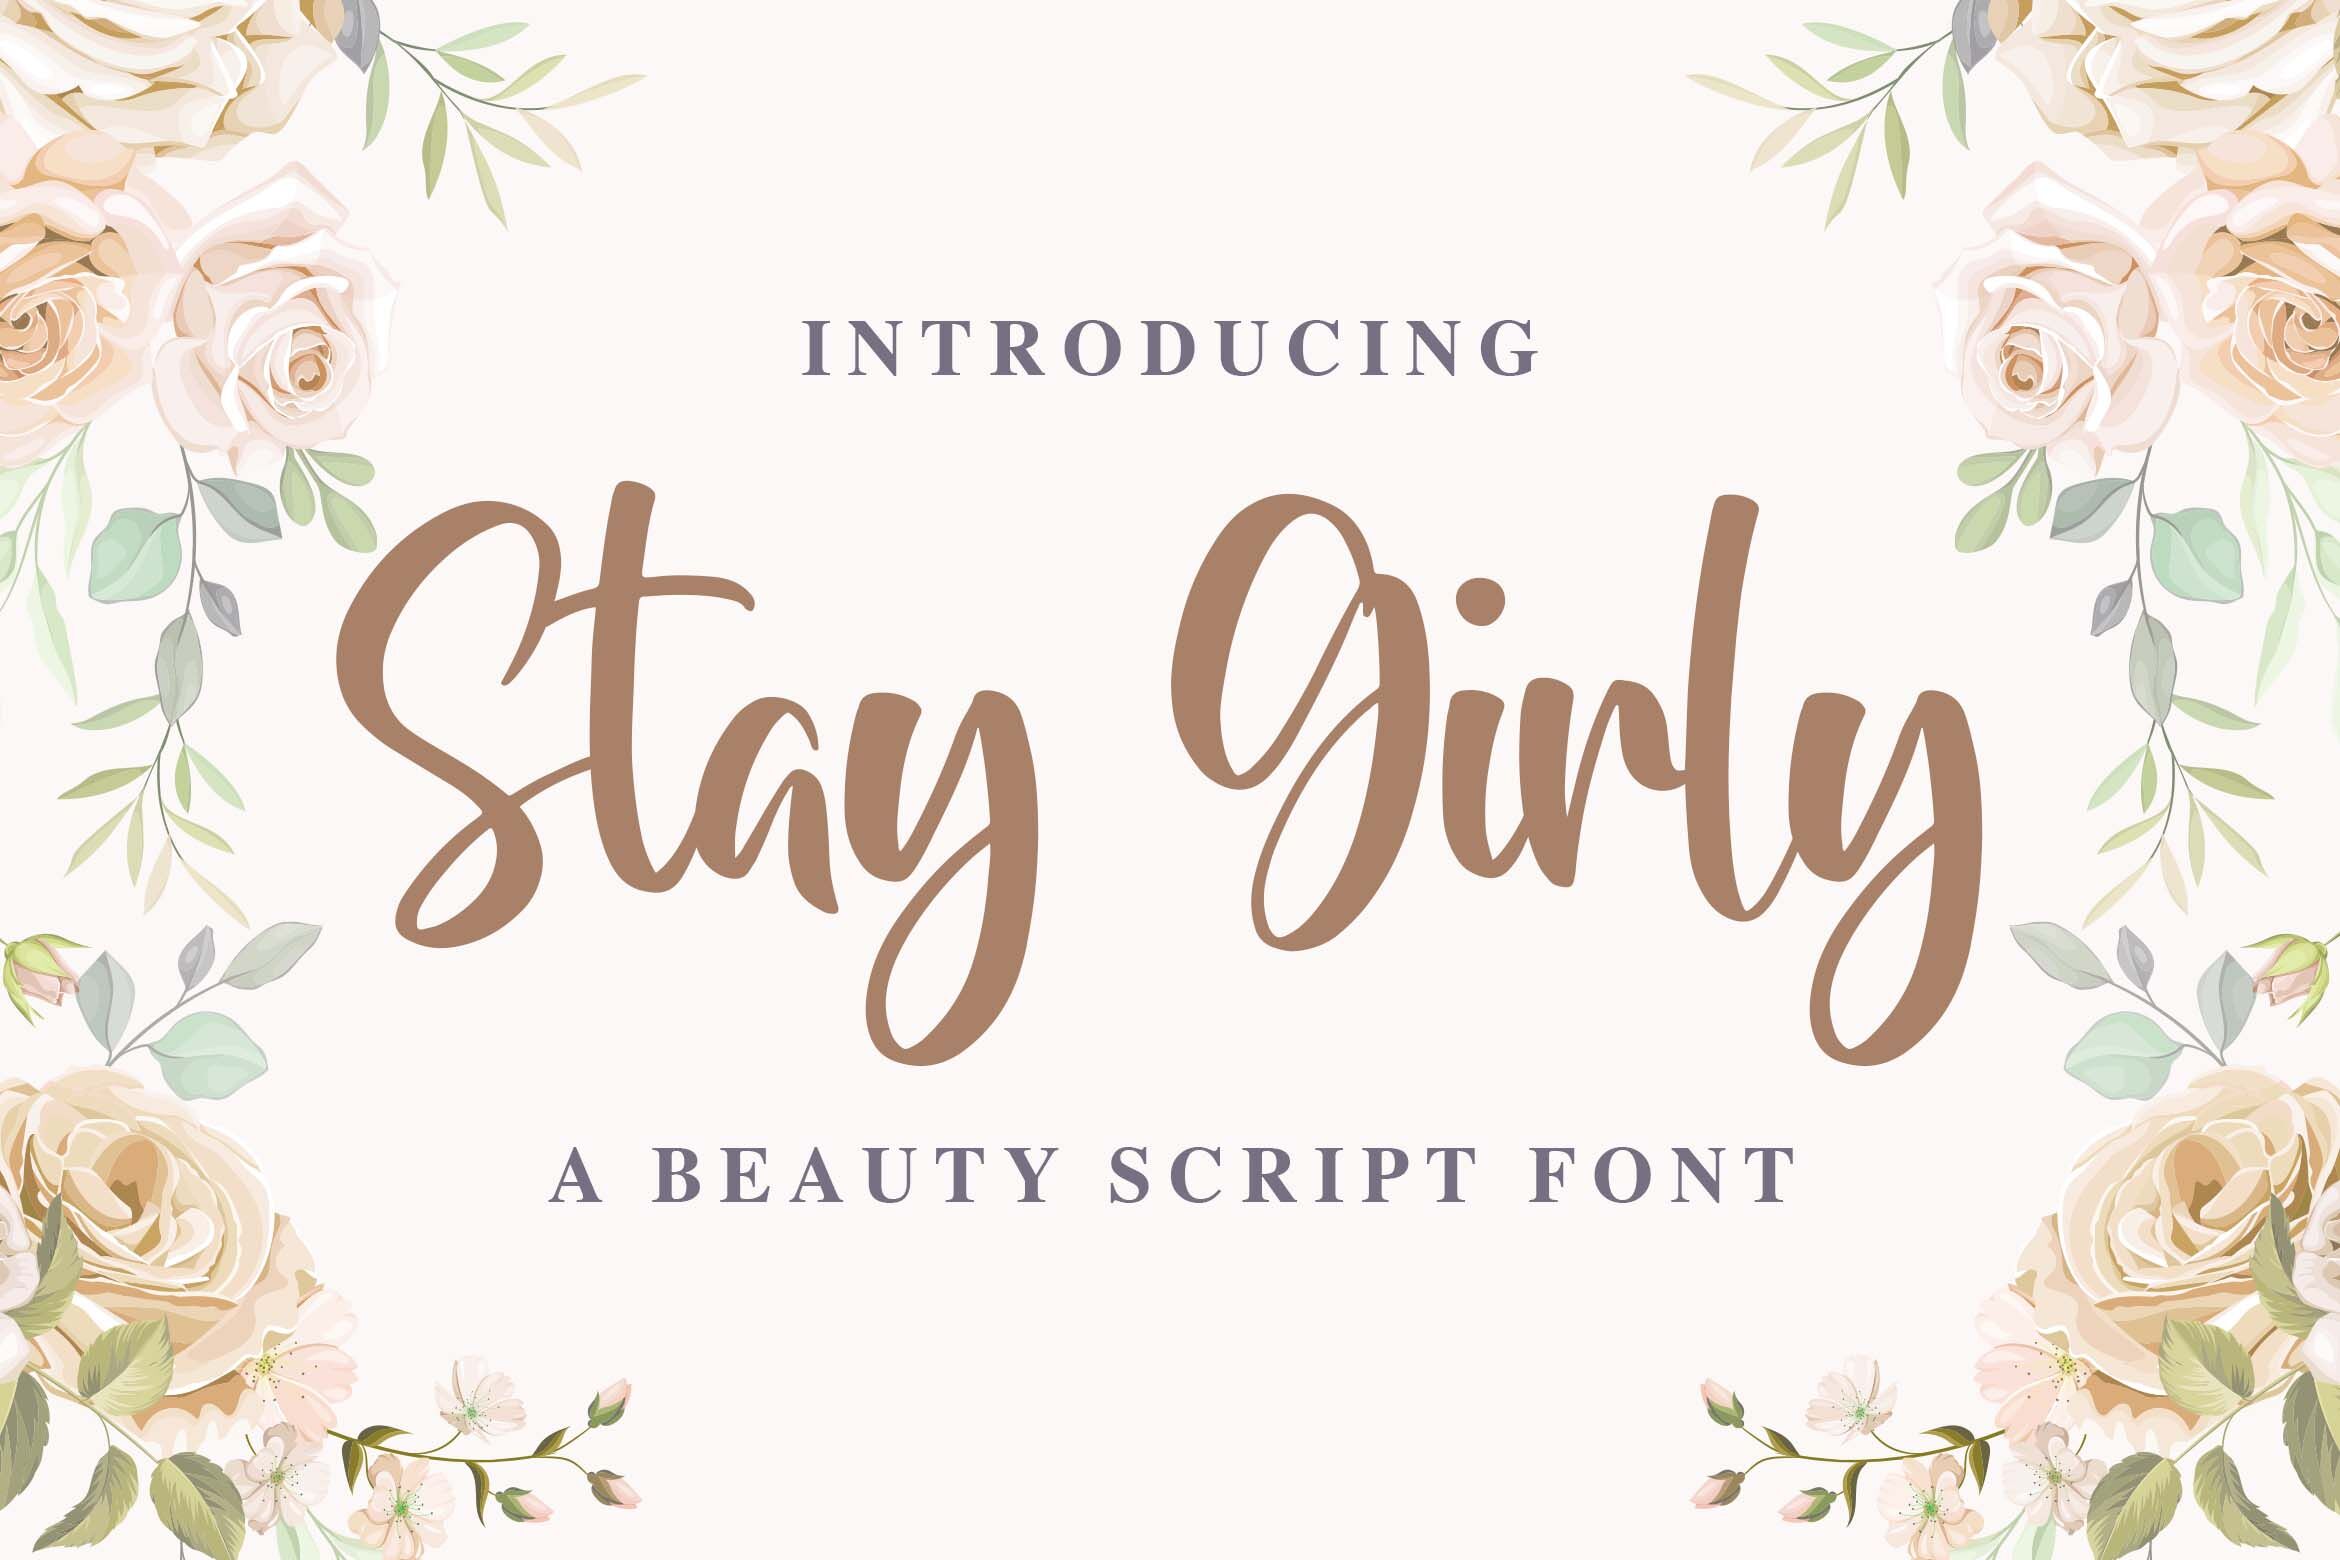 Stay Girly A Beauty Script Font By Blankids Thehungryjpeg Com